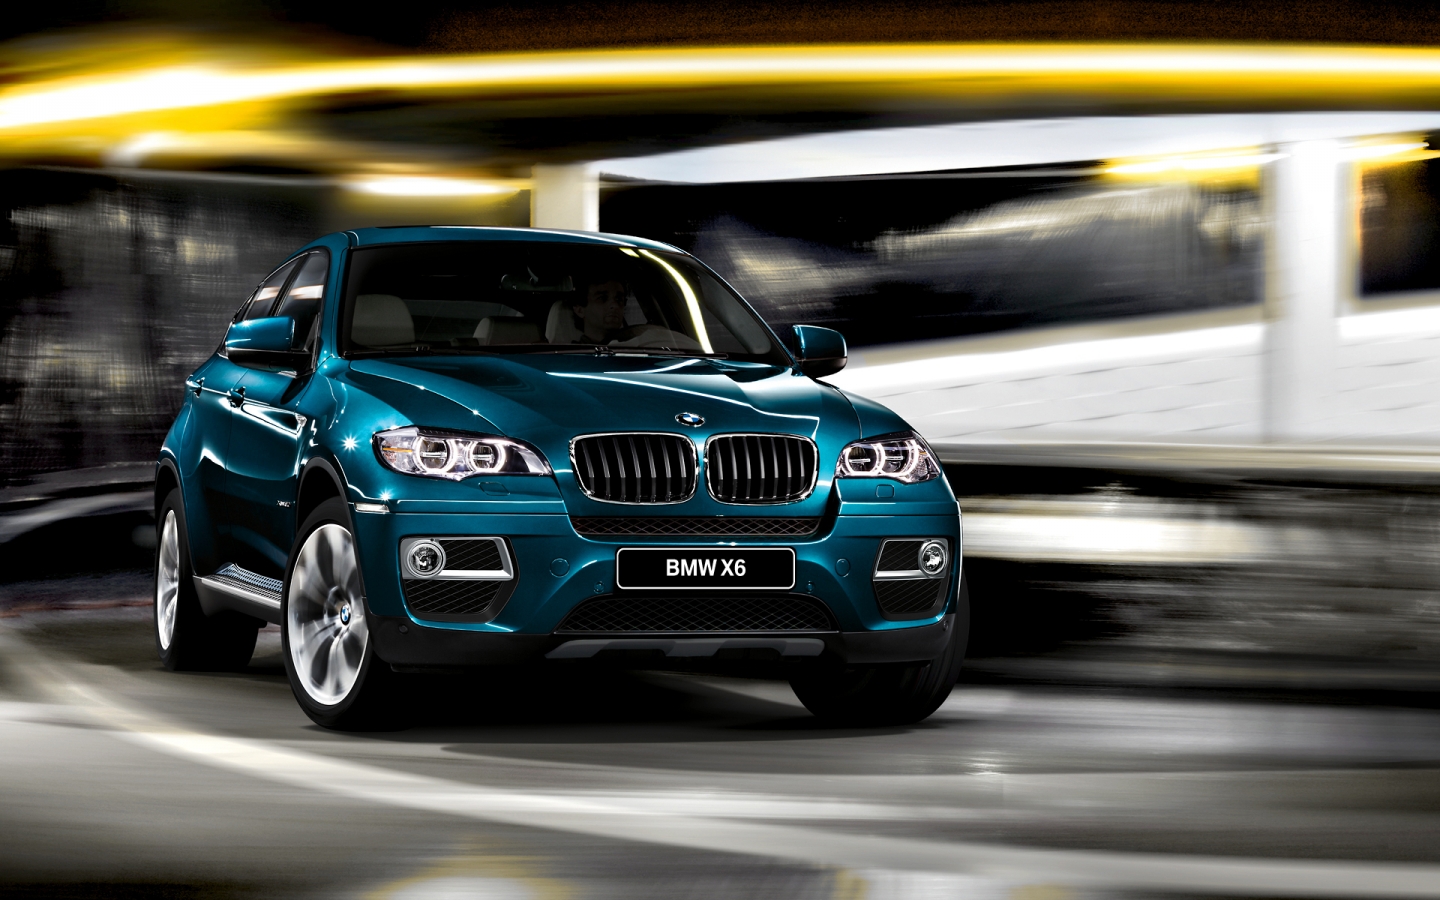 Stunning BMW X6 for 1440 x 900 widescreen resolution